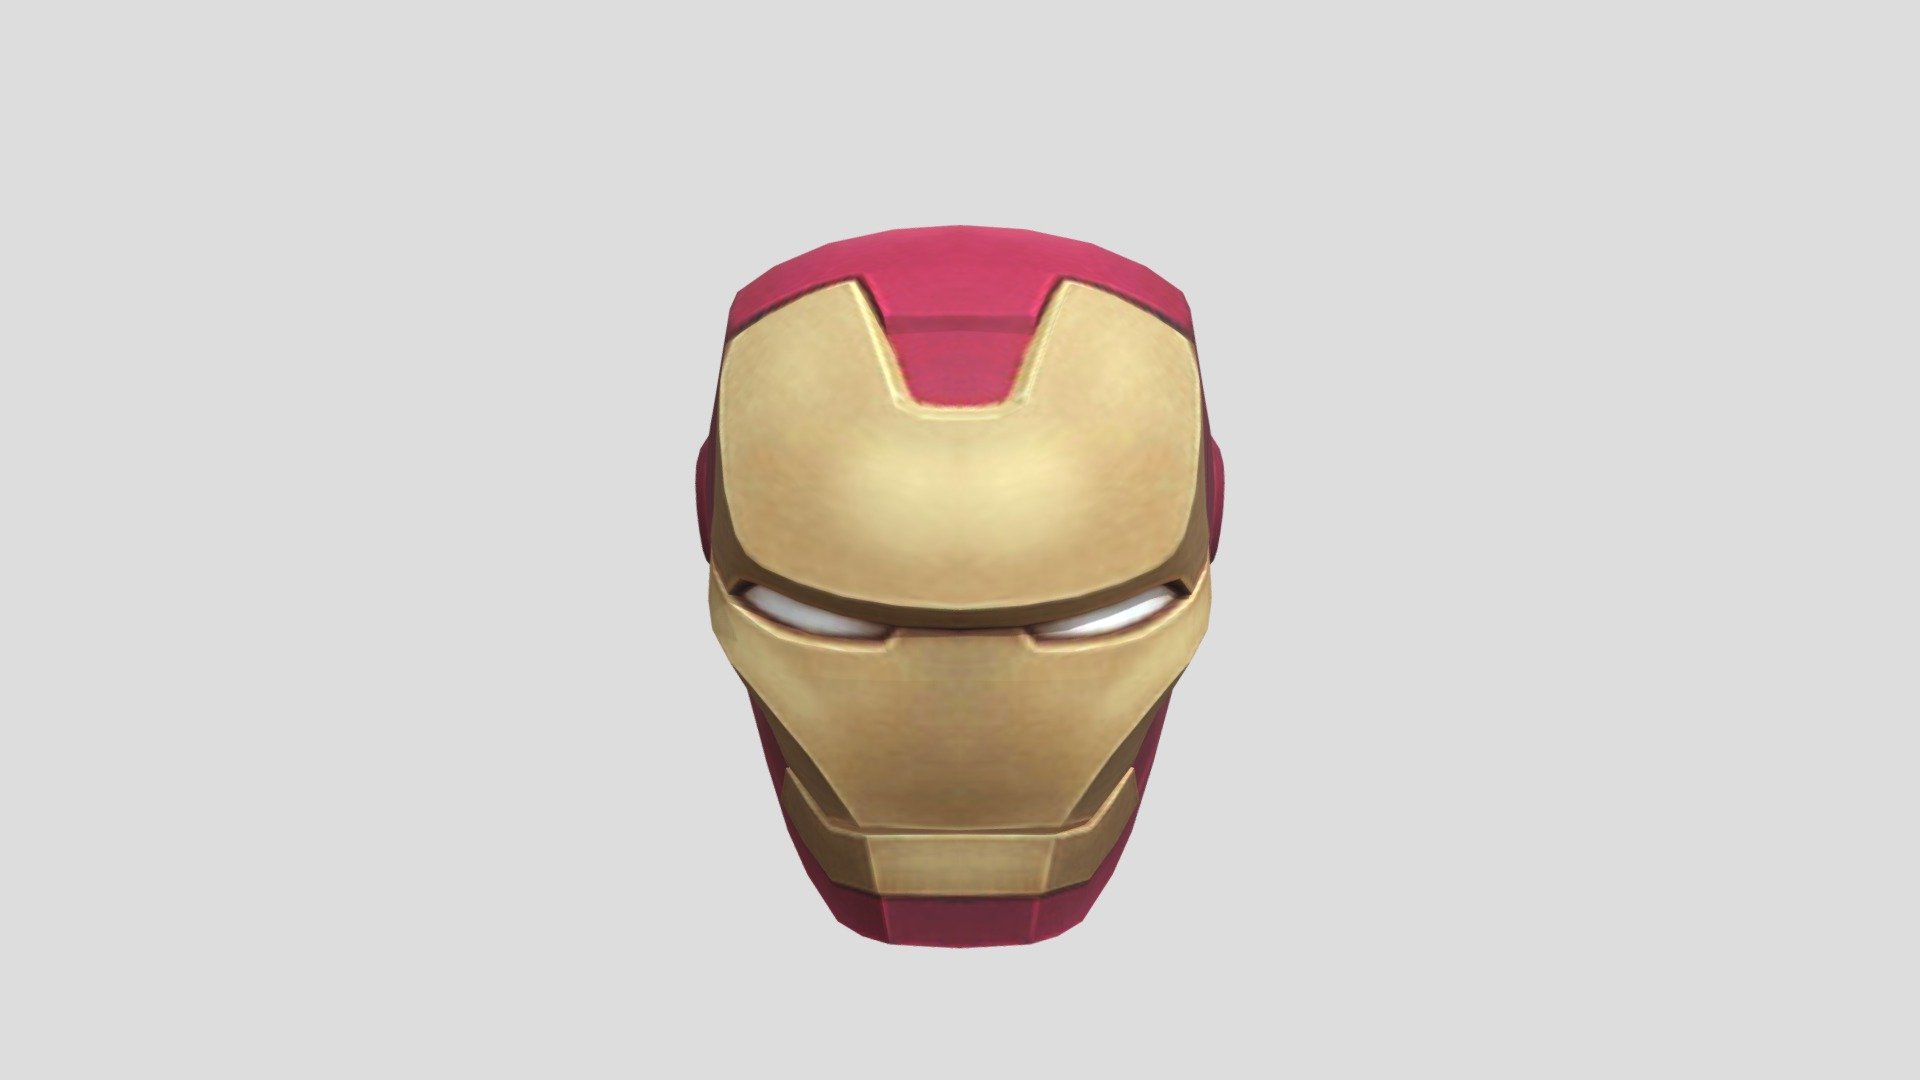 Do a 3d transparent roblox avatar image by Ironman1m